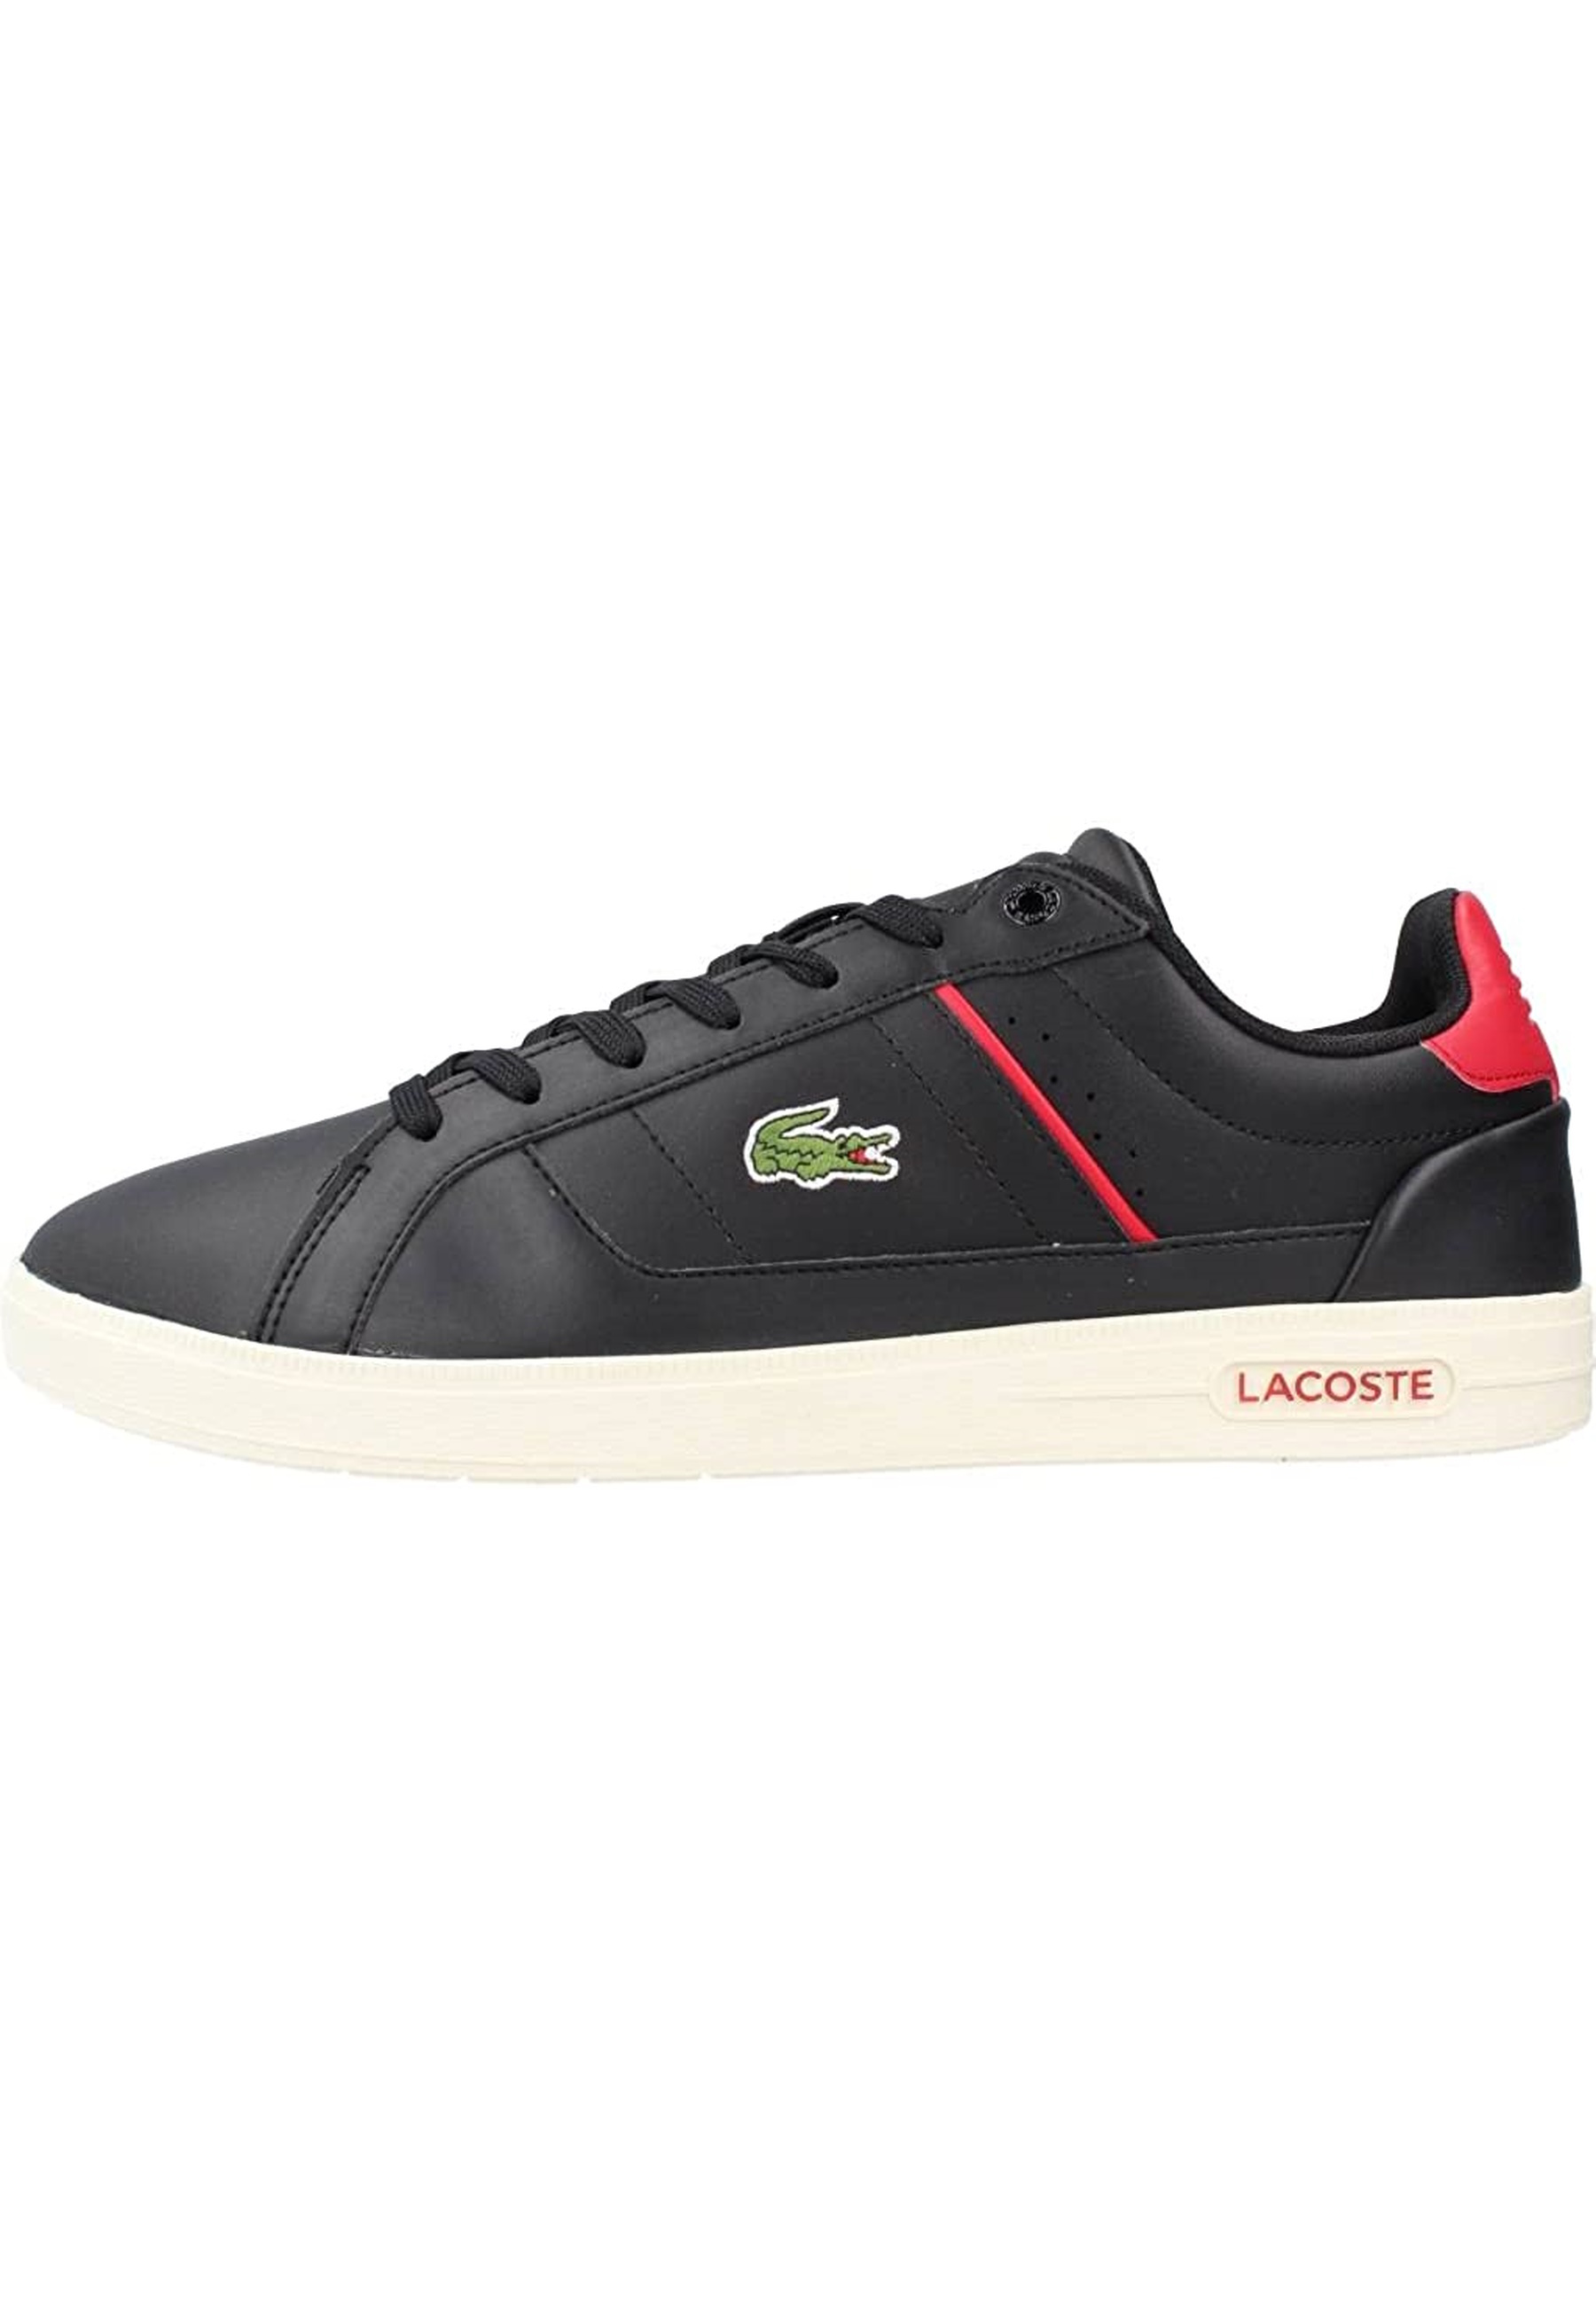 Низкие кроссовки Lacoste 'Europa Pro 222', черный низкие кроссовки europa pro lacoste белый темно синий